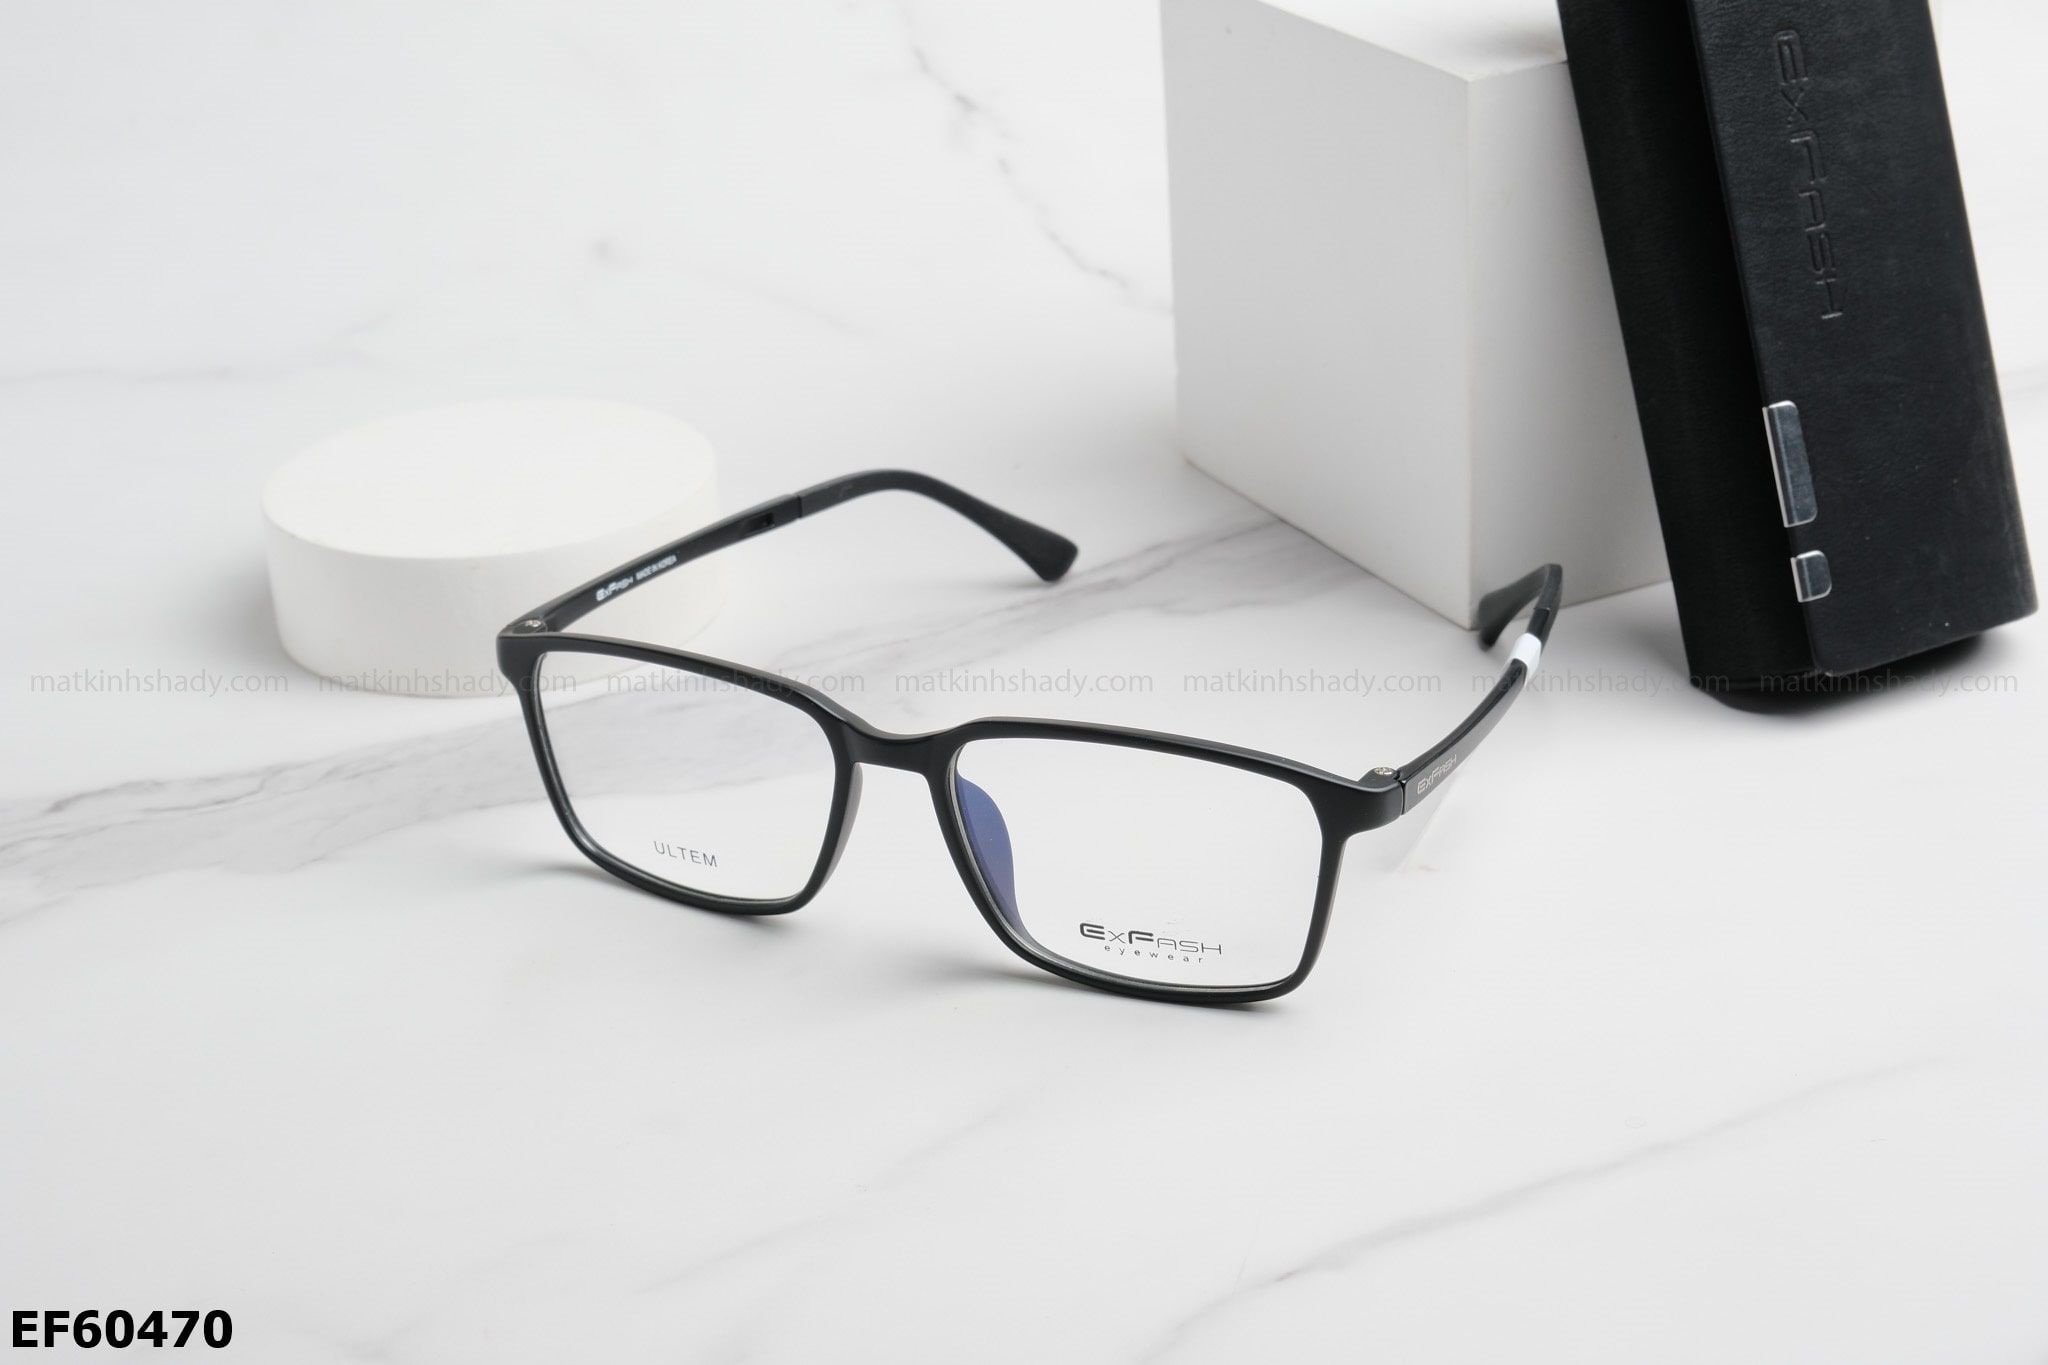  Exfash Eyewear - Glasses - EF60470 